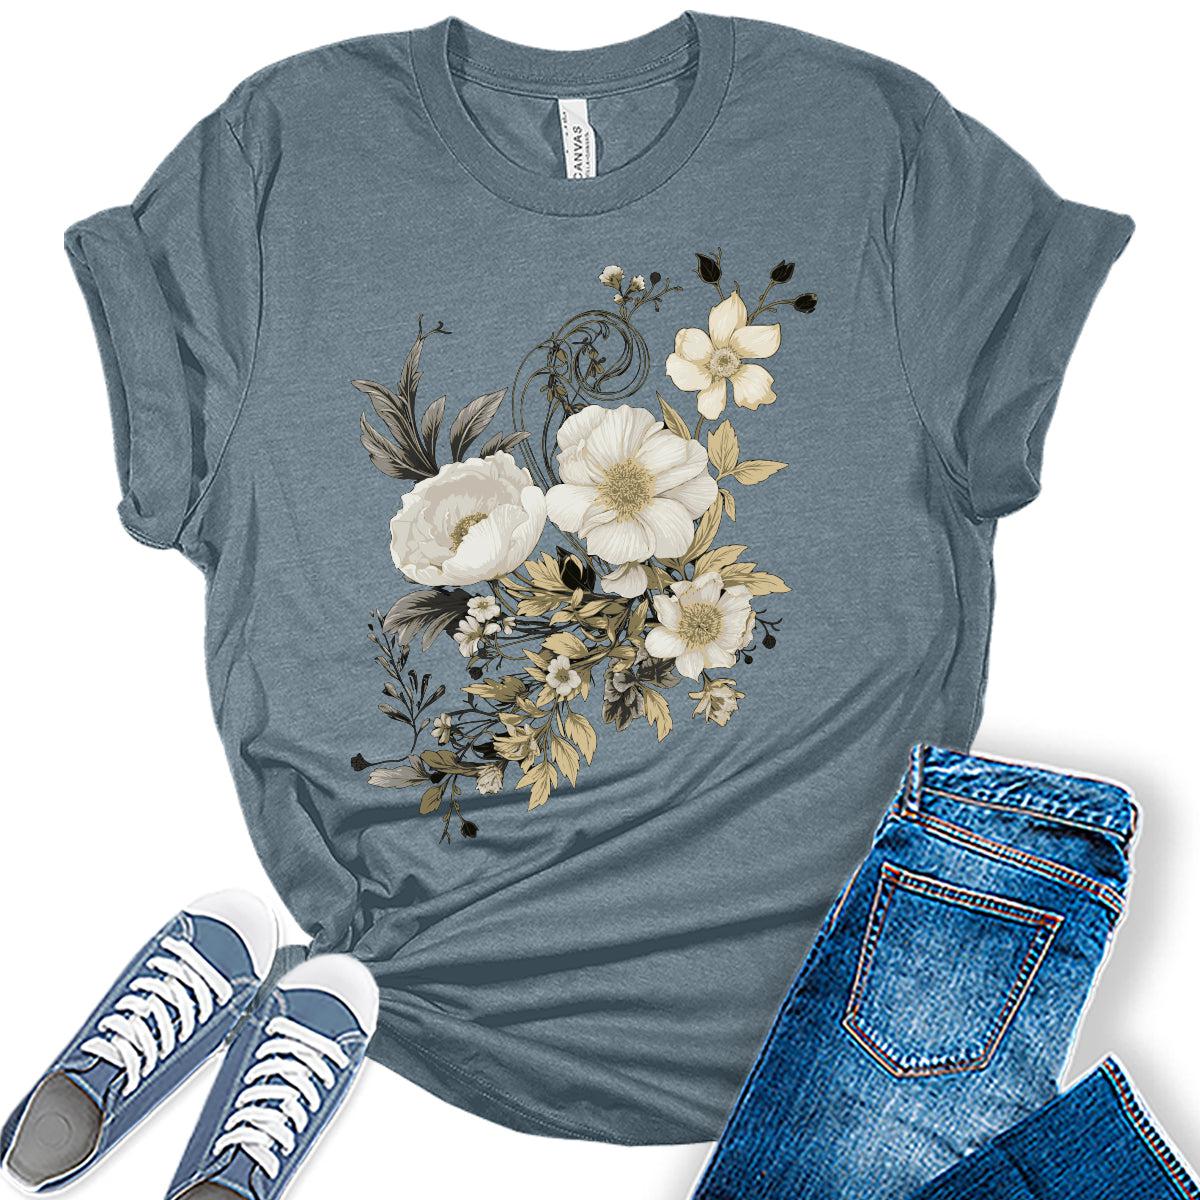 Flower Vines Graphic Shirt